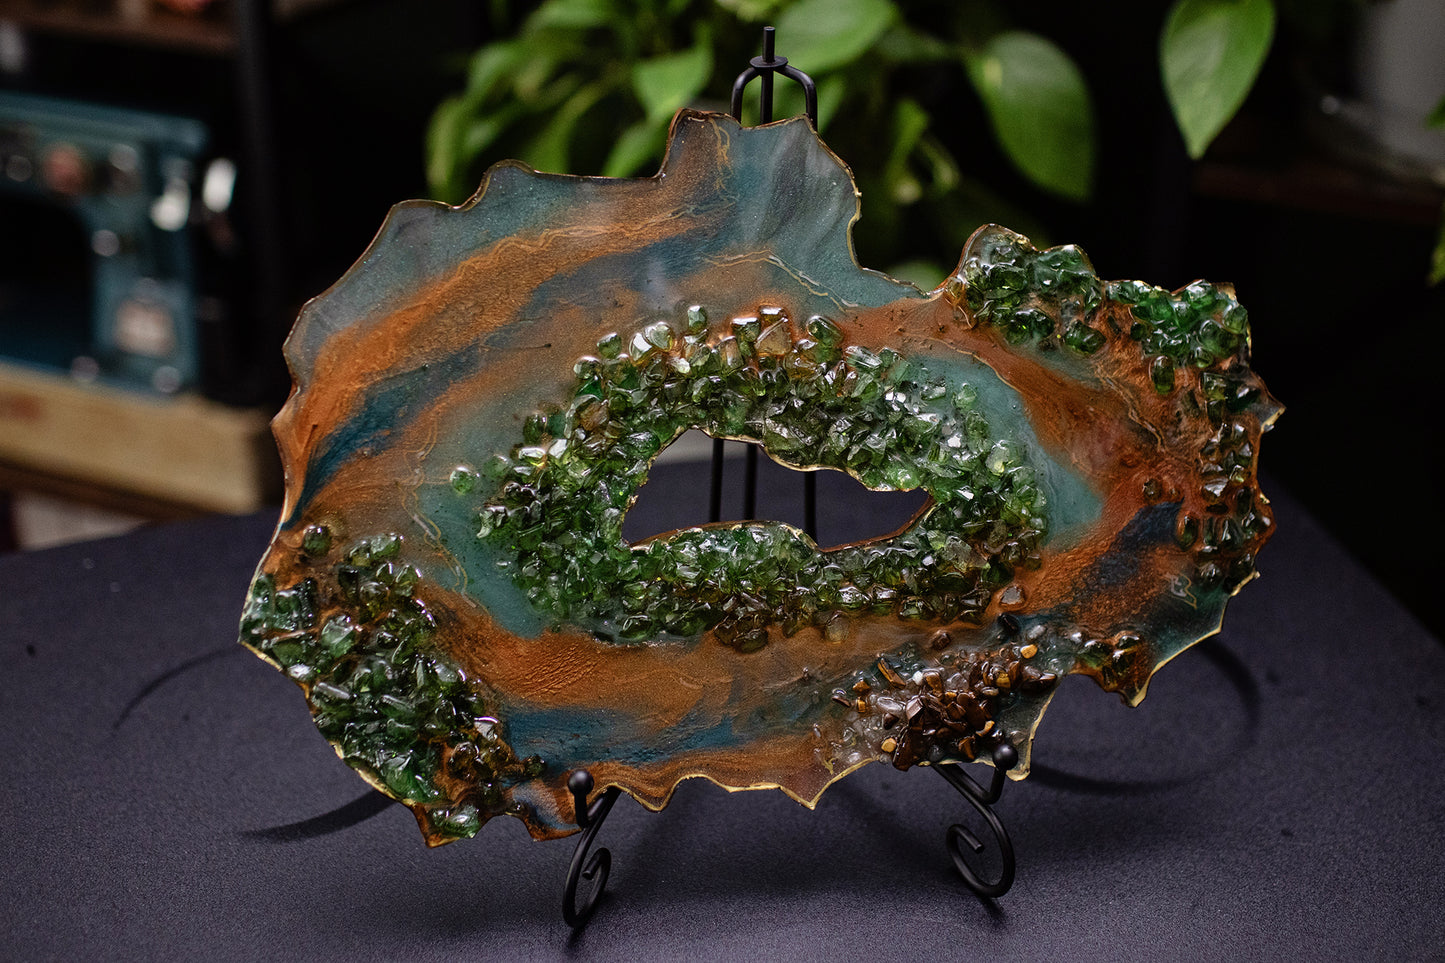 Green Aventurine & Tigers Eye Resin Geode Sculpture